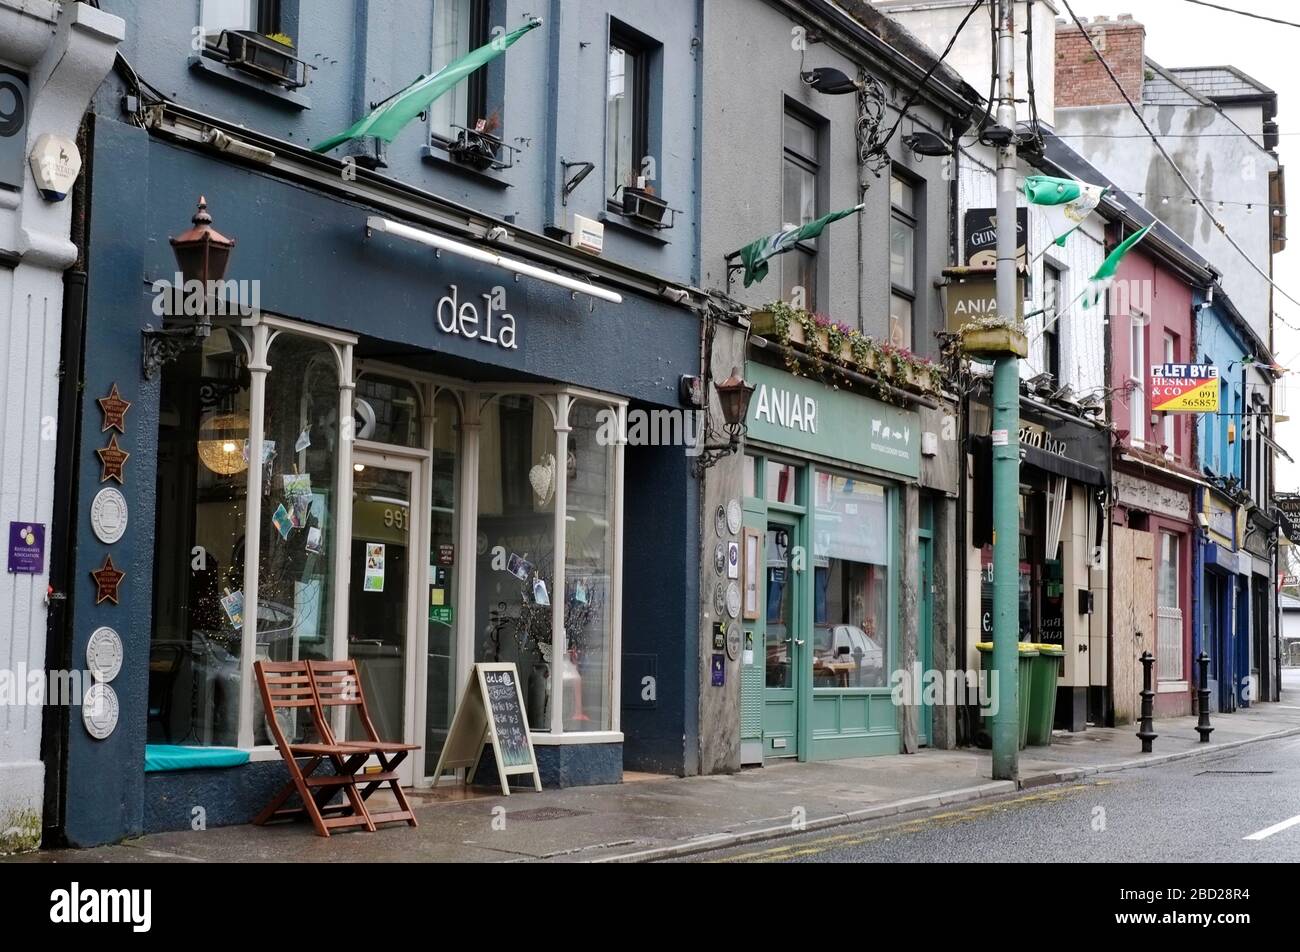 Aniar und Dela Restaurants, Galway City, County Galway, Irland Stockfoto